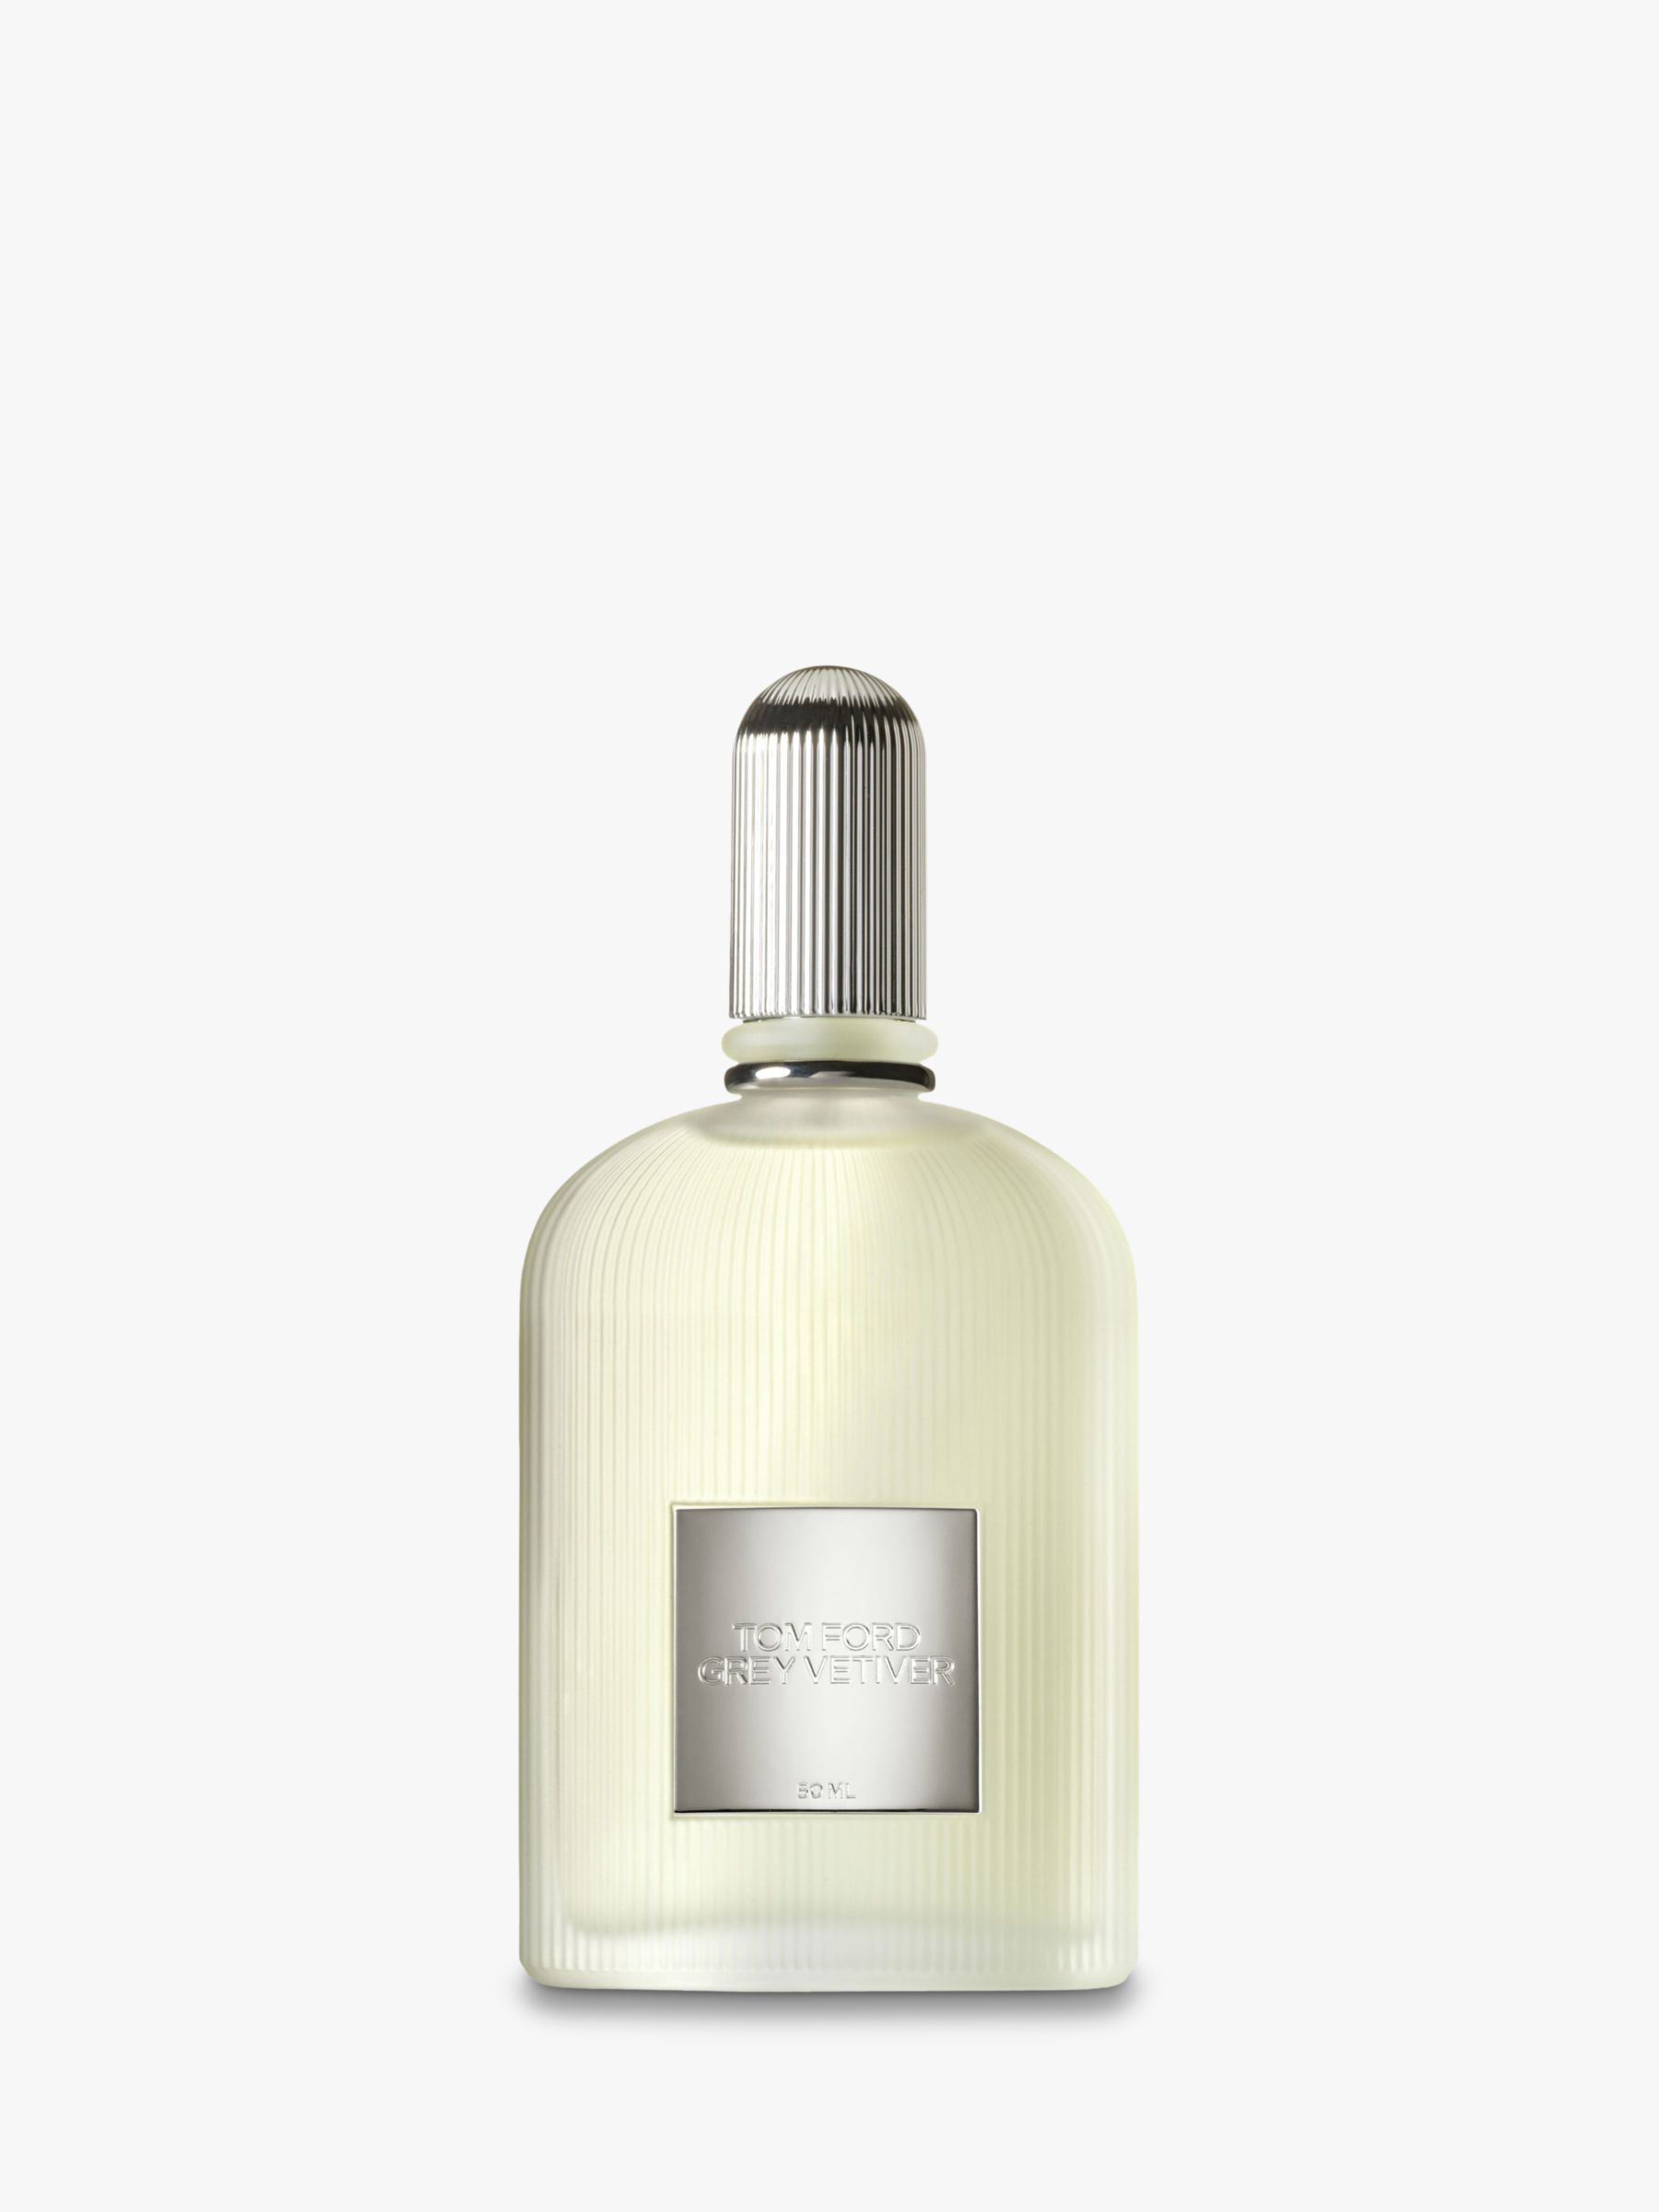 TOM FORD Grey Vetiver Eau de Parfum, 50ml at John Lewis & Partners